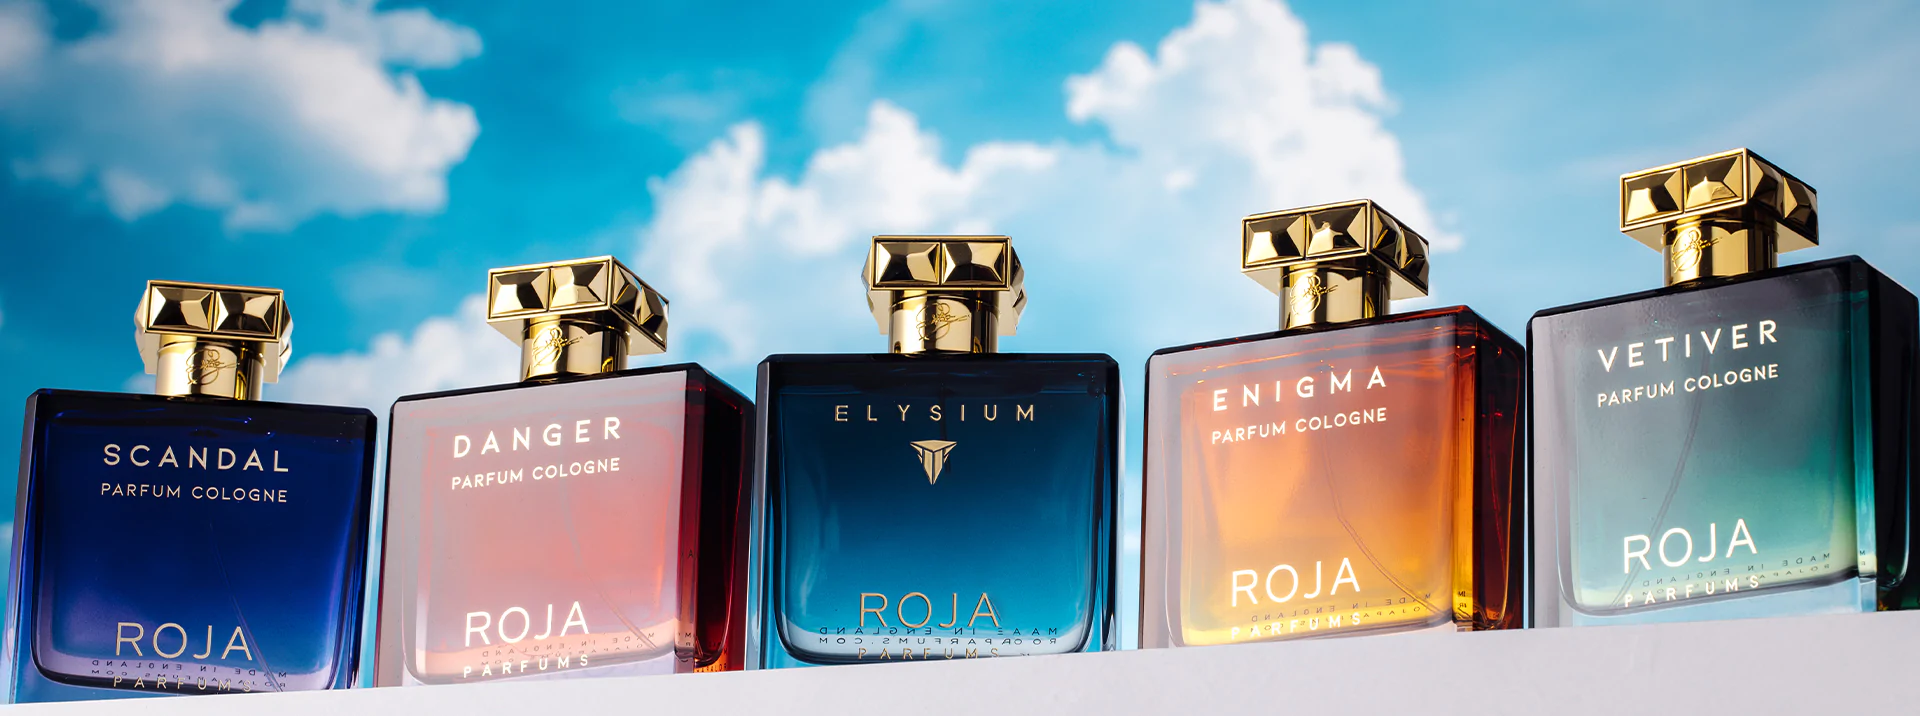 Enigma Parfum Cologne - ROJA